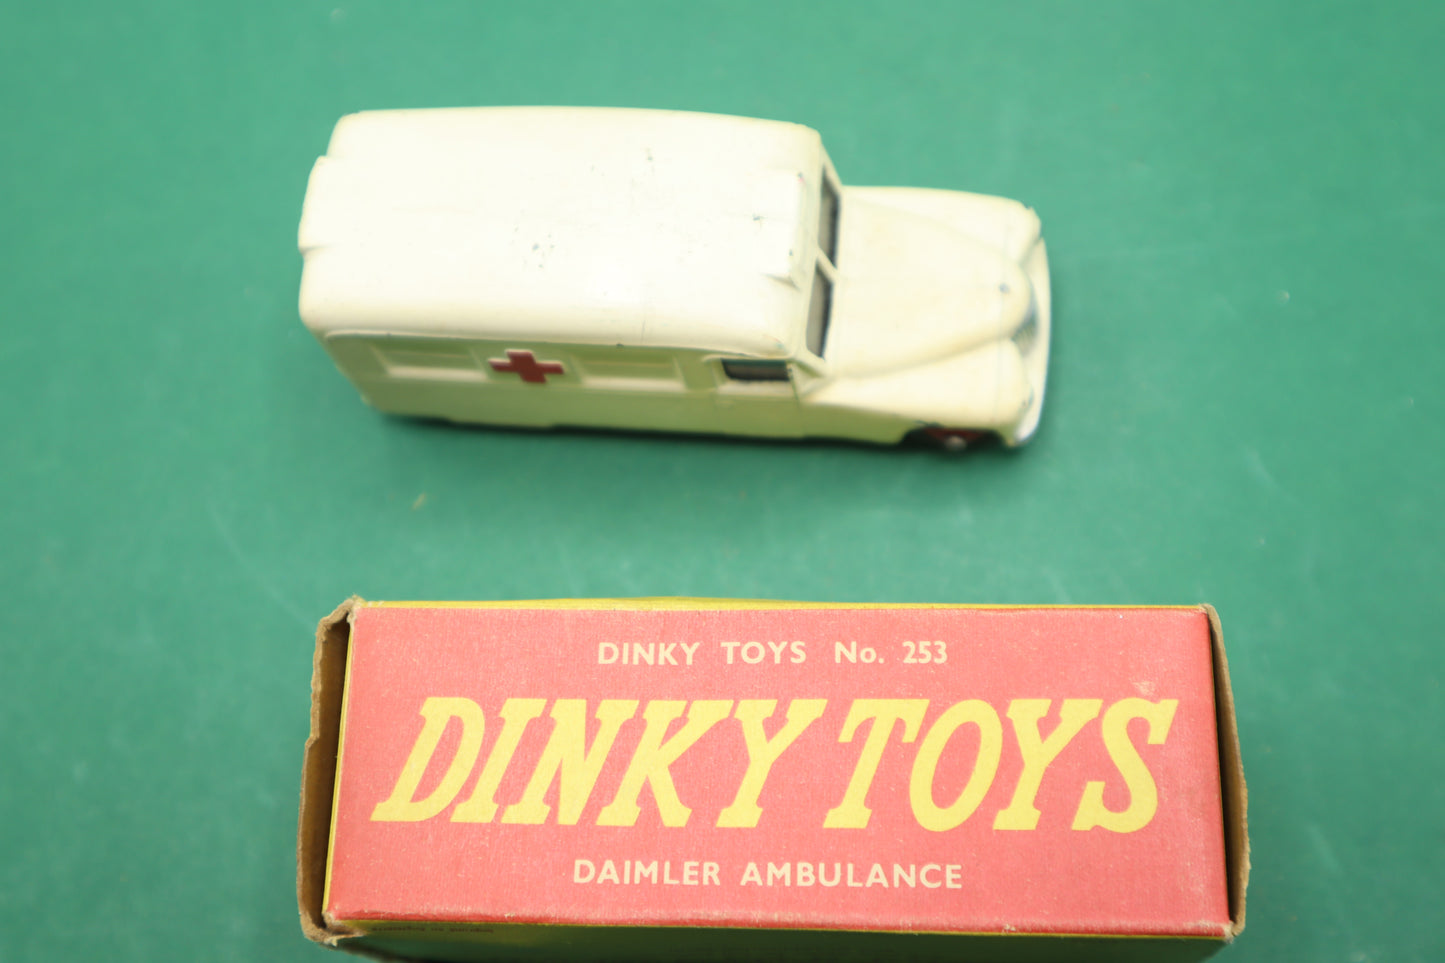 DINKY TOYS - 253 - DAIMLER AMBULANCE - CREMA/ROSSO SCATOLA ORIGINALE 1/43